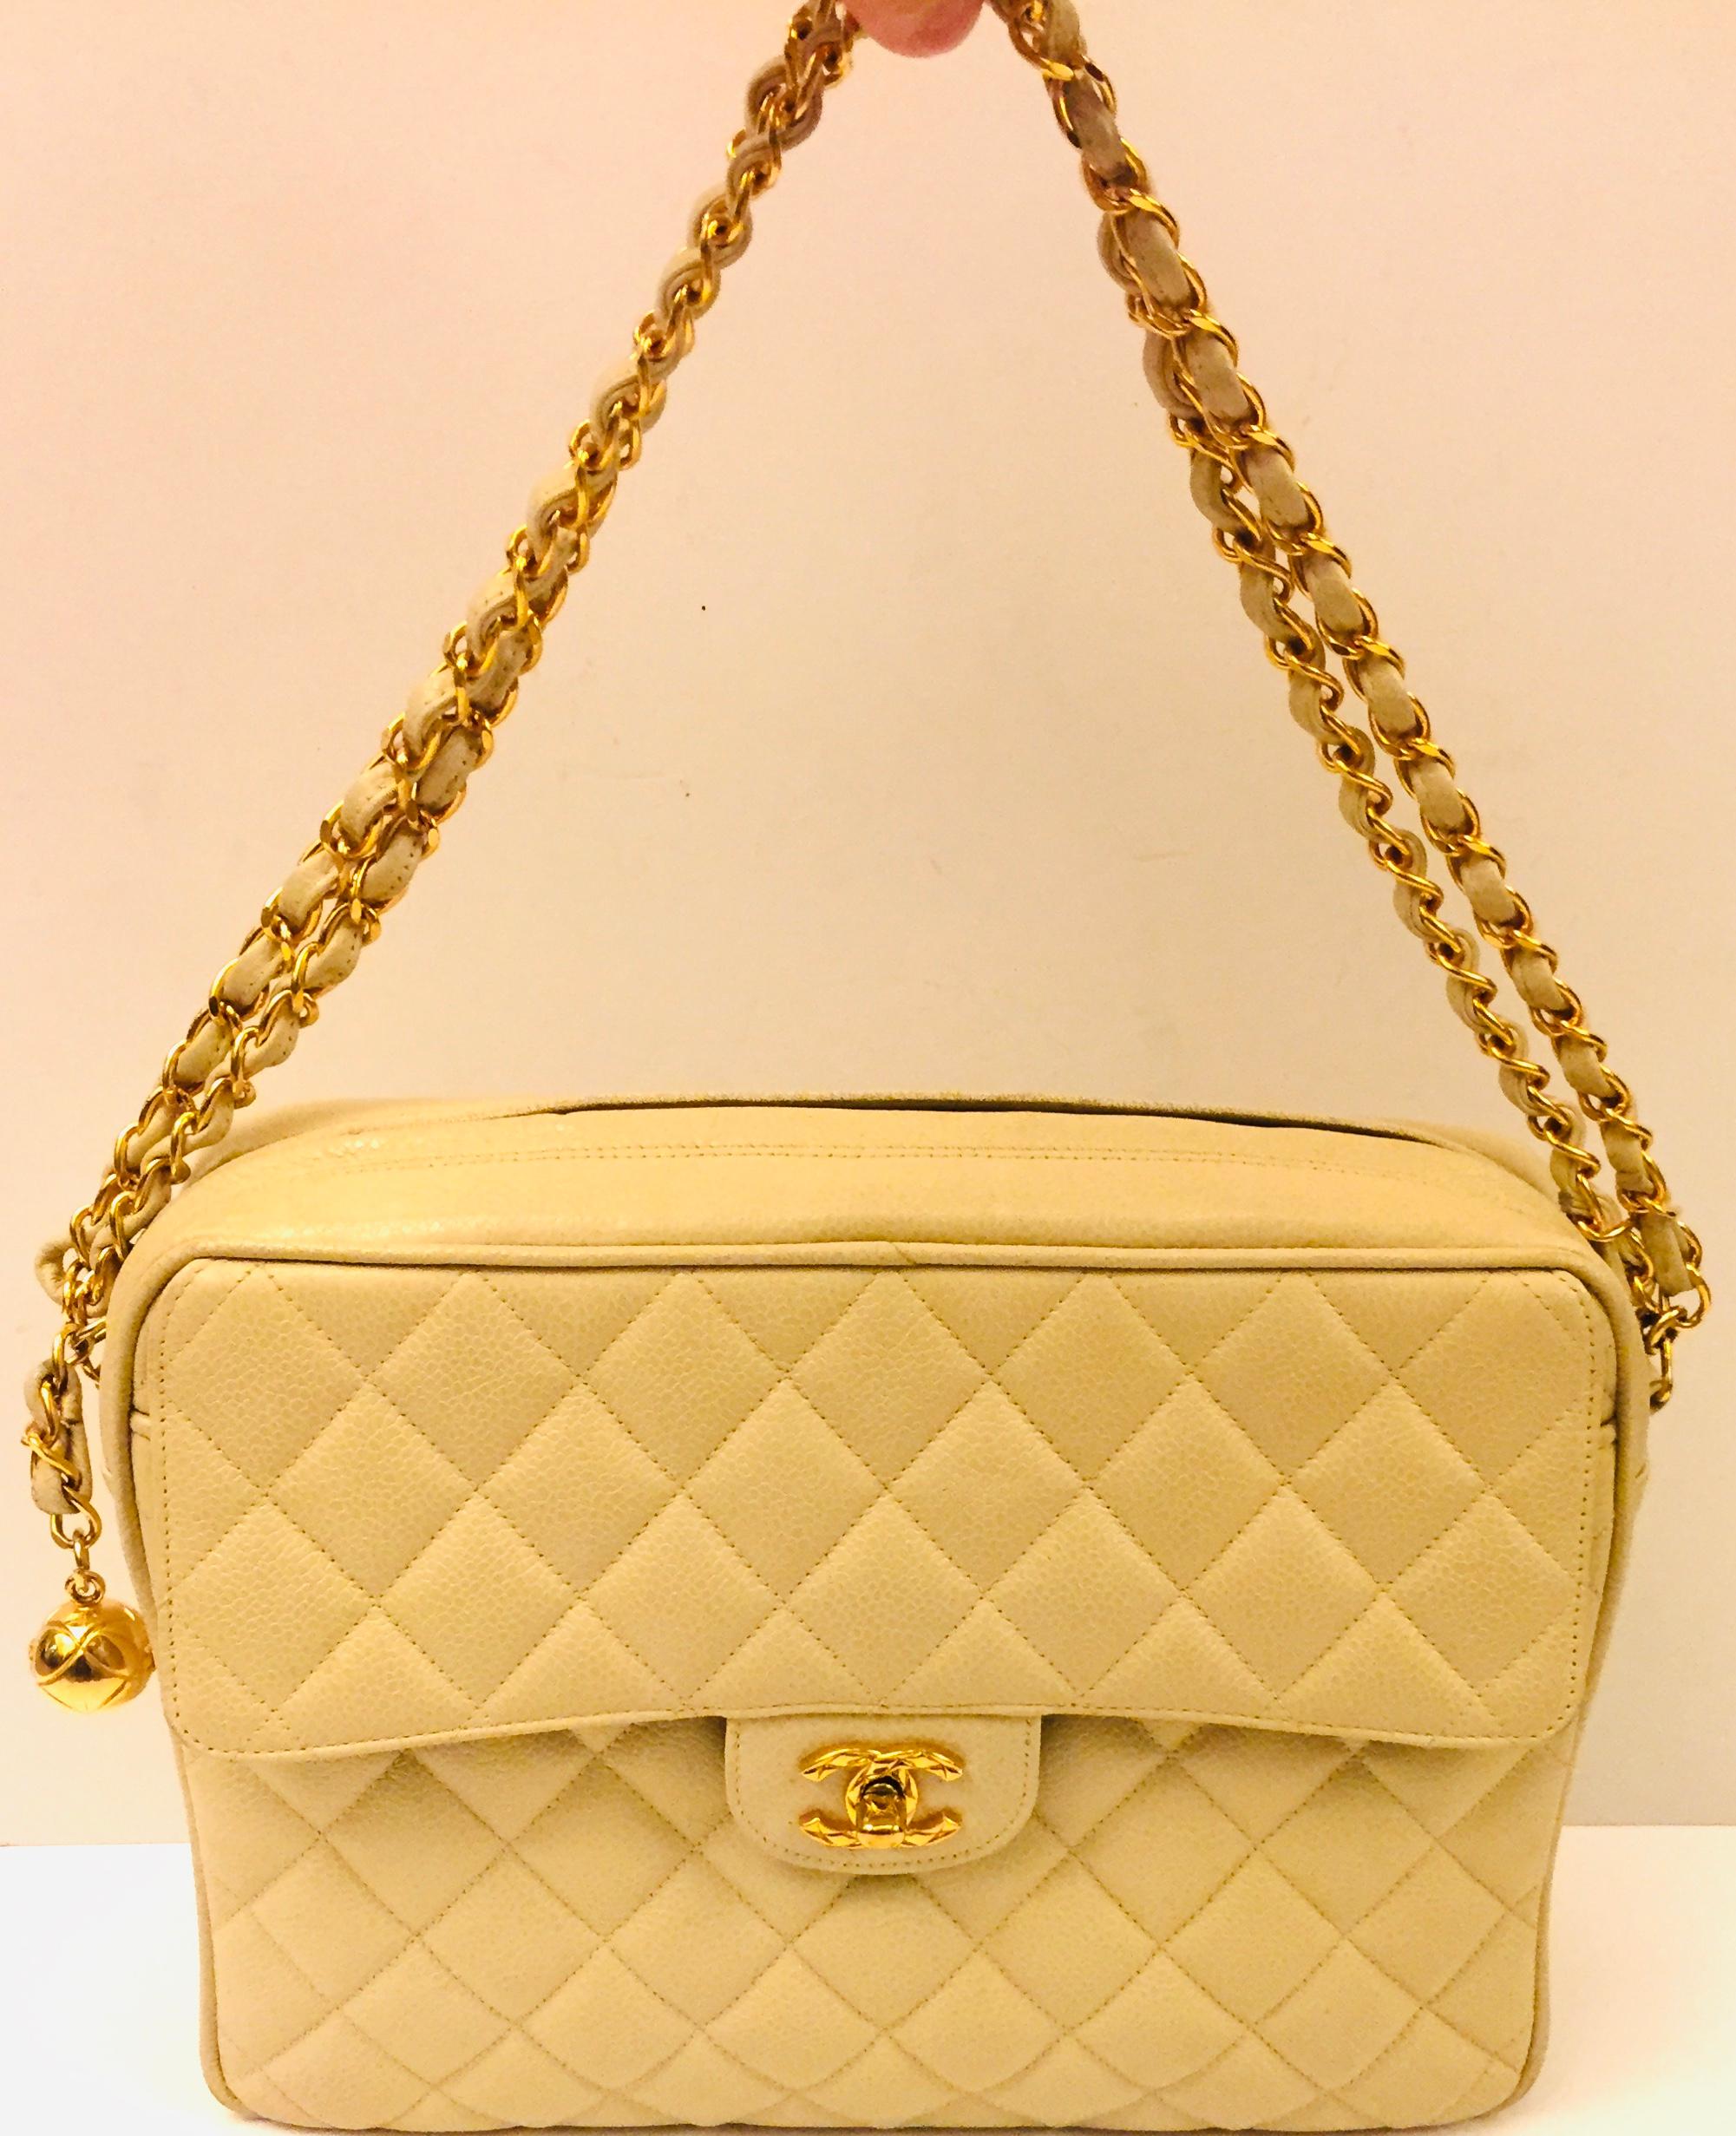 Chanel Off White Caviar Double Chain Handbag For Sale 1